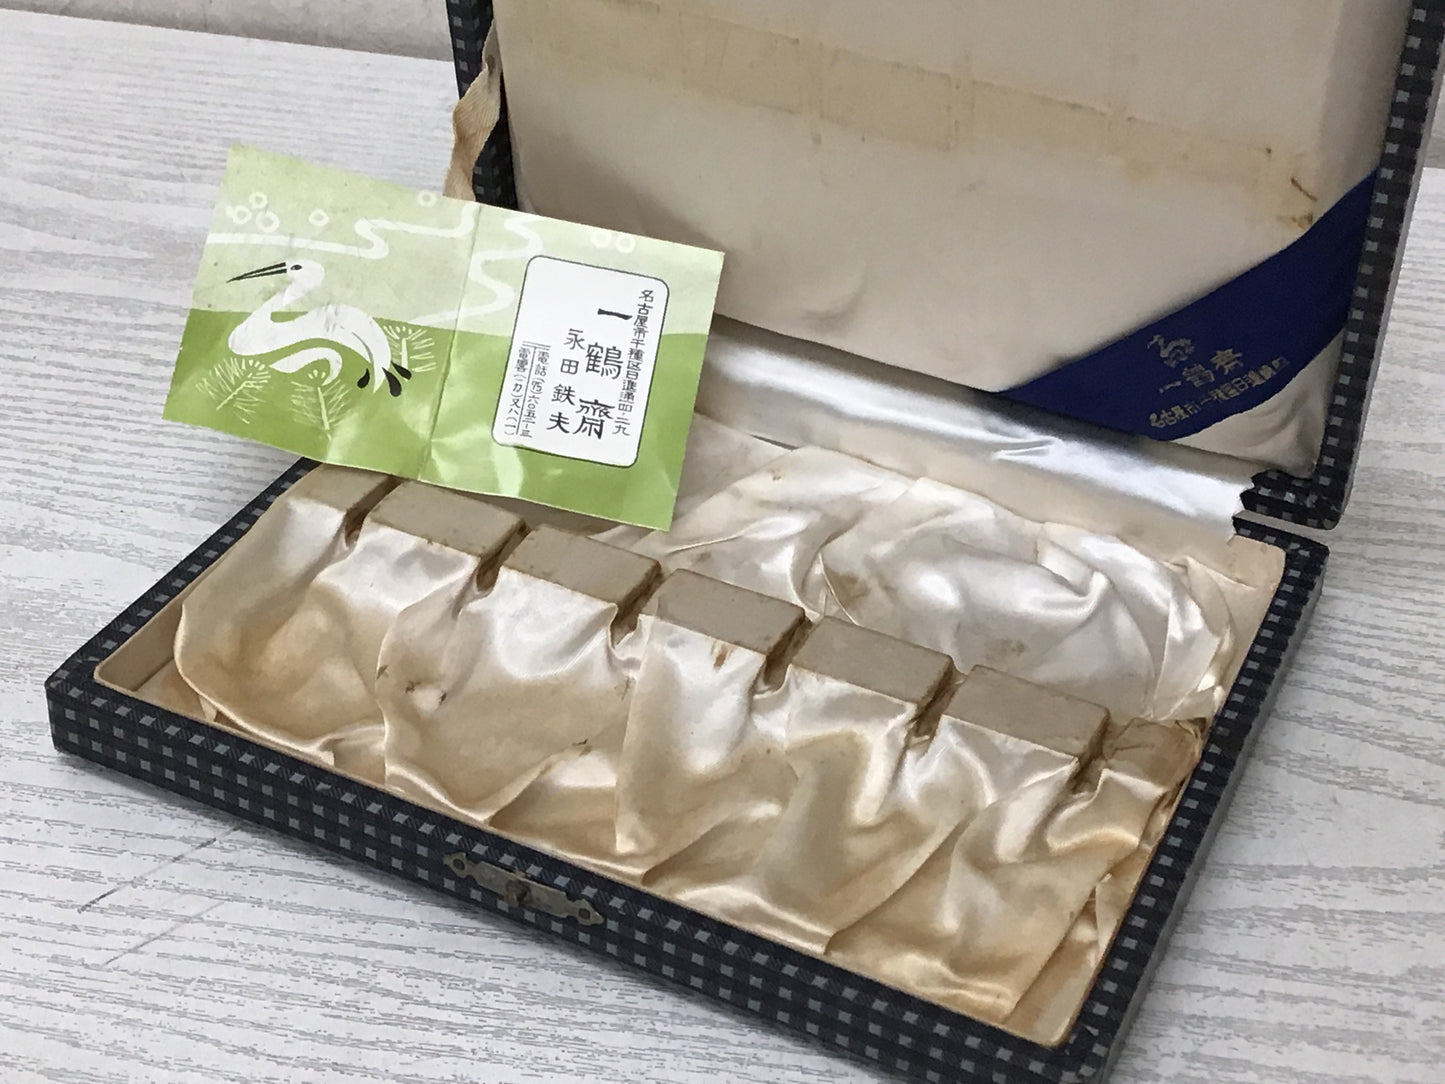 Y2710 CUTLERY Silver Spoon Set of 6 box Japanese antique vintage food tableware